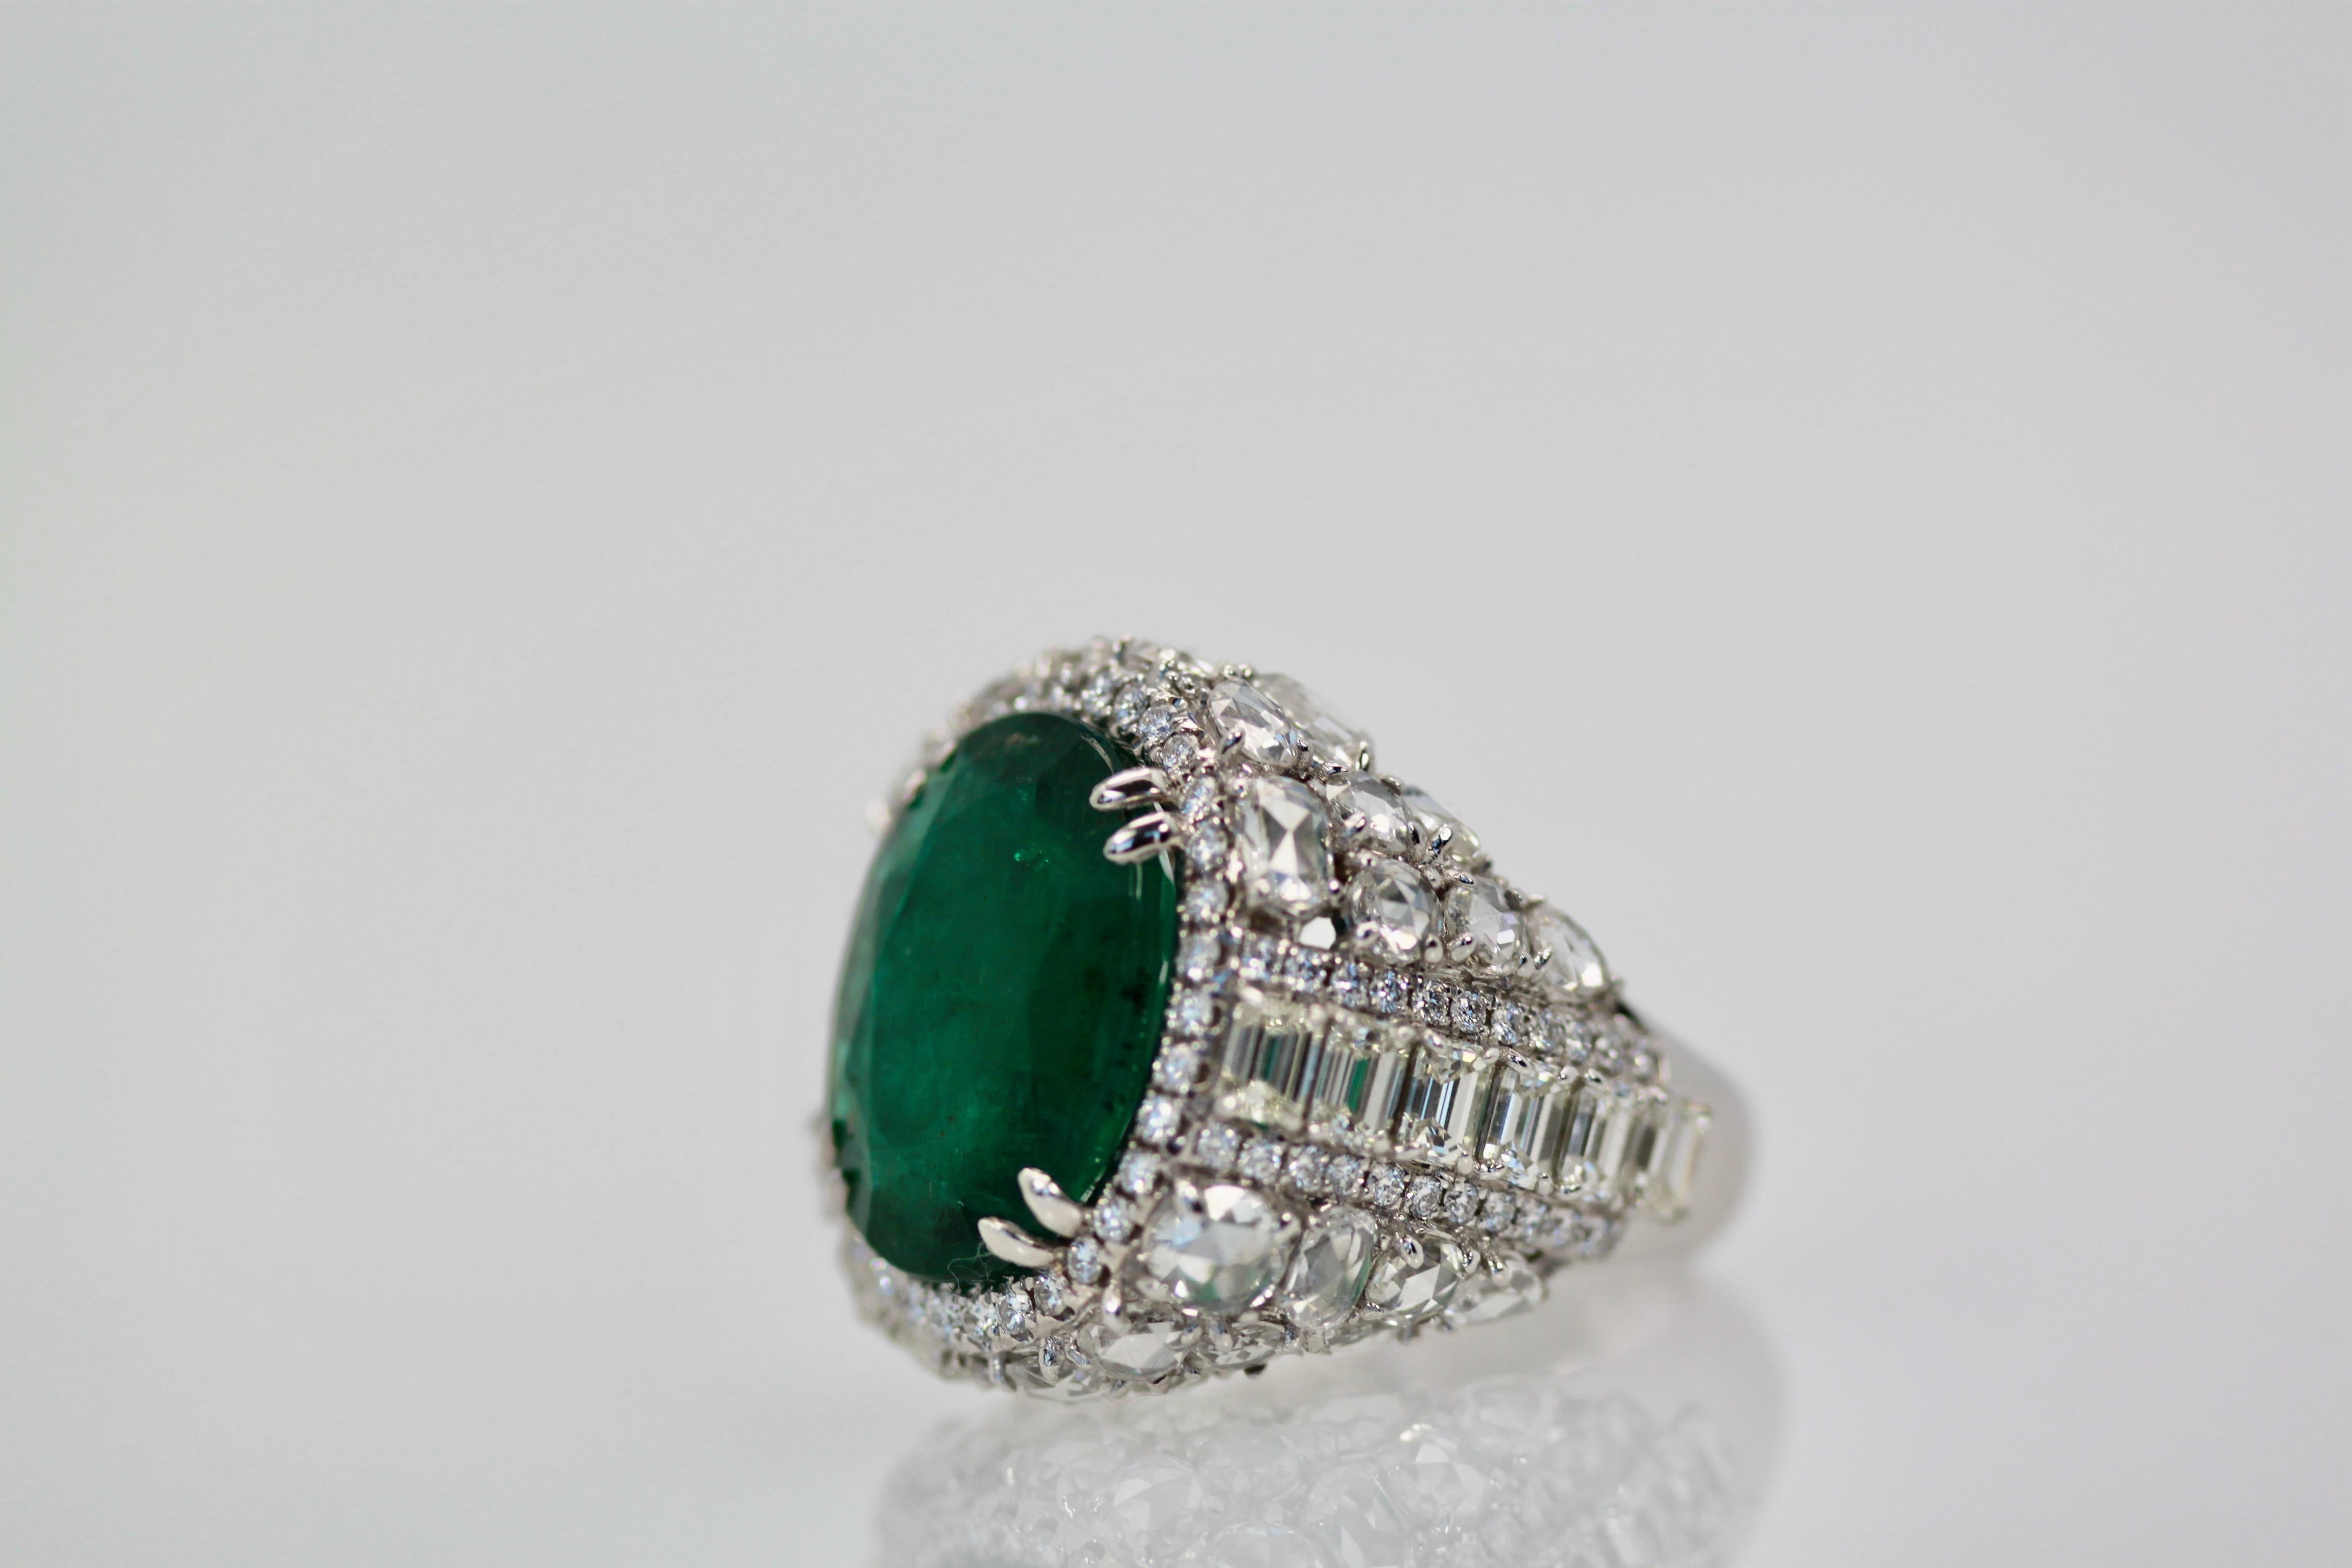 Oval Cut Oval Emerald 12.25 Carat Diamond Surround 8.85 Carat Total Weight 21.10 Carat For Sale